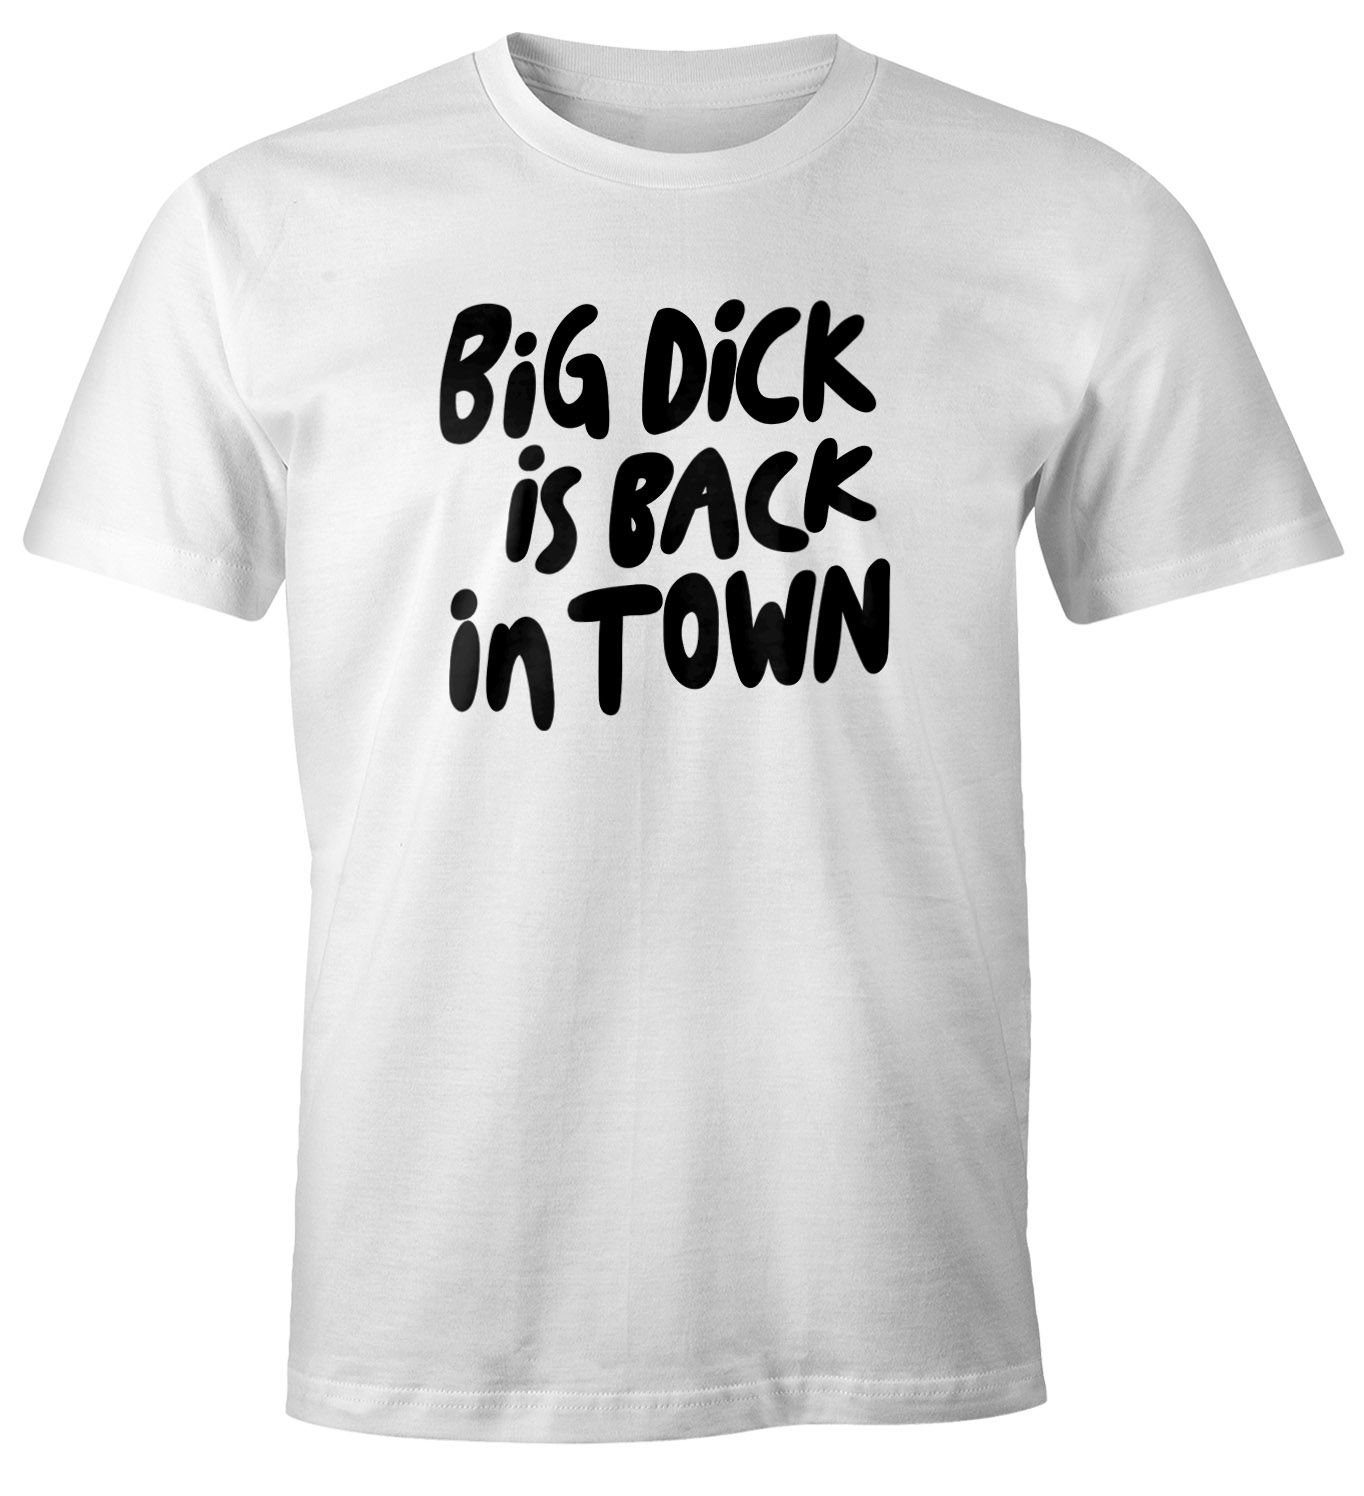 MoonWorks Print-Shirt Herren T-Shirt mit Spruch lustig Big Dick is back in Town Ironie Fun-Shirt Moonworks® mit Print weiß